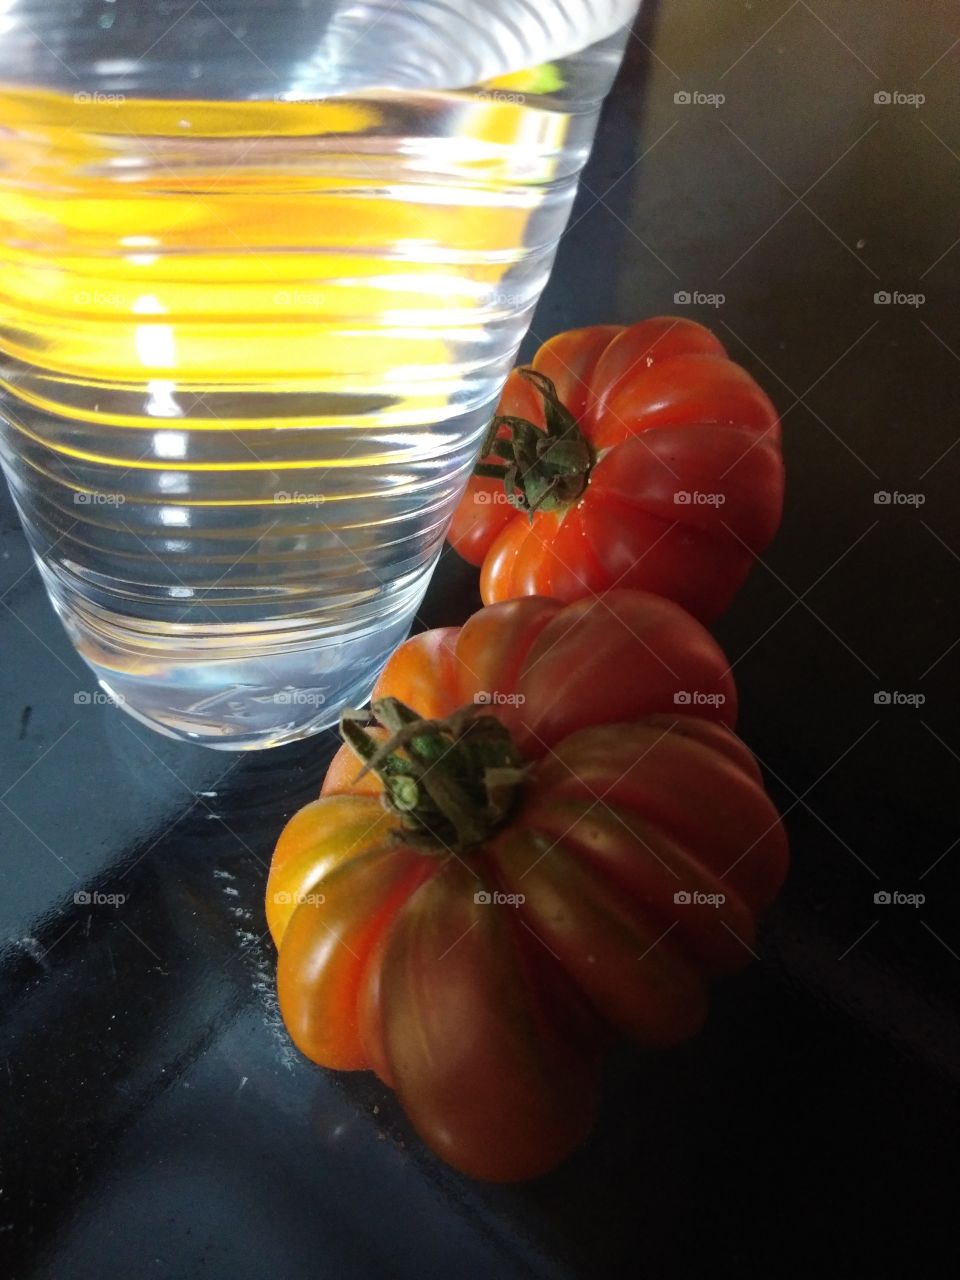 nice tomato